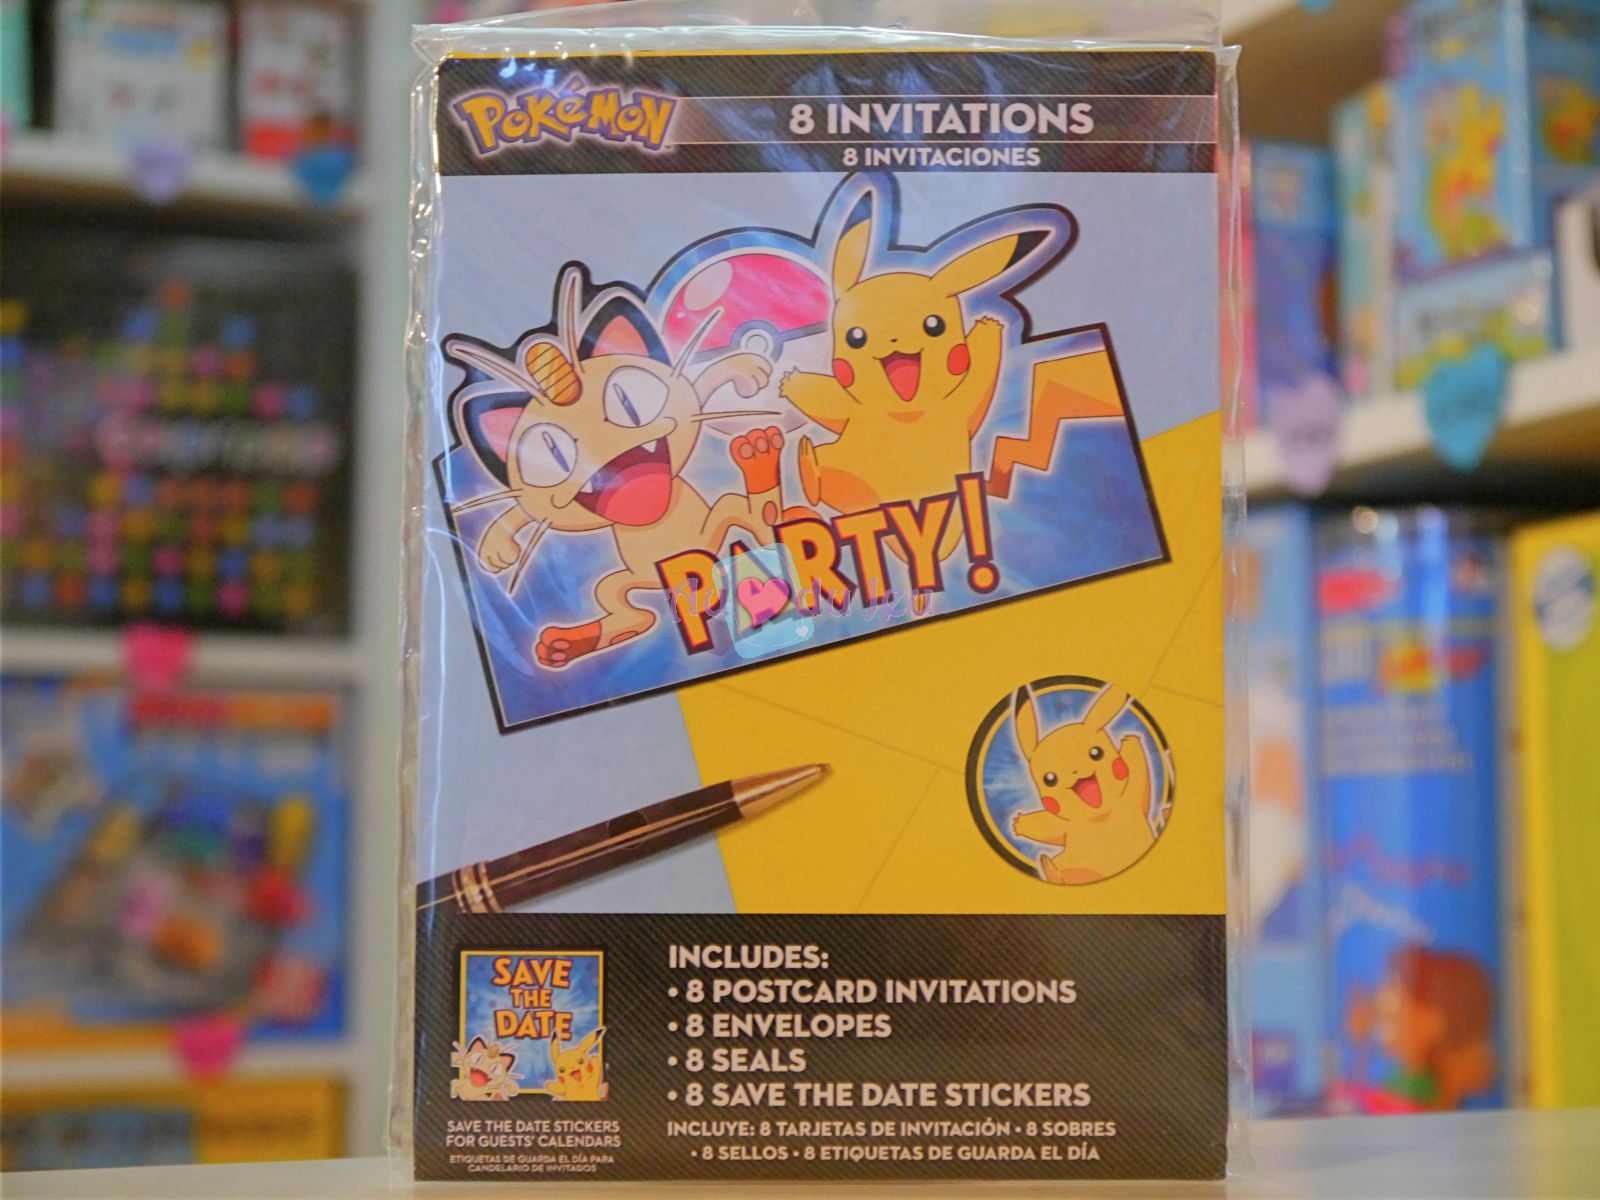 8 Cartes Invitation Pokemon